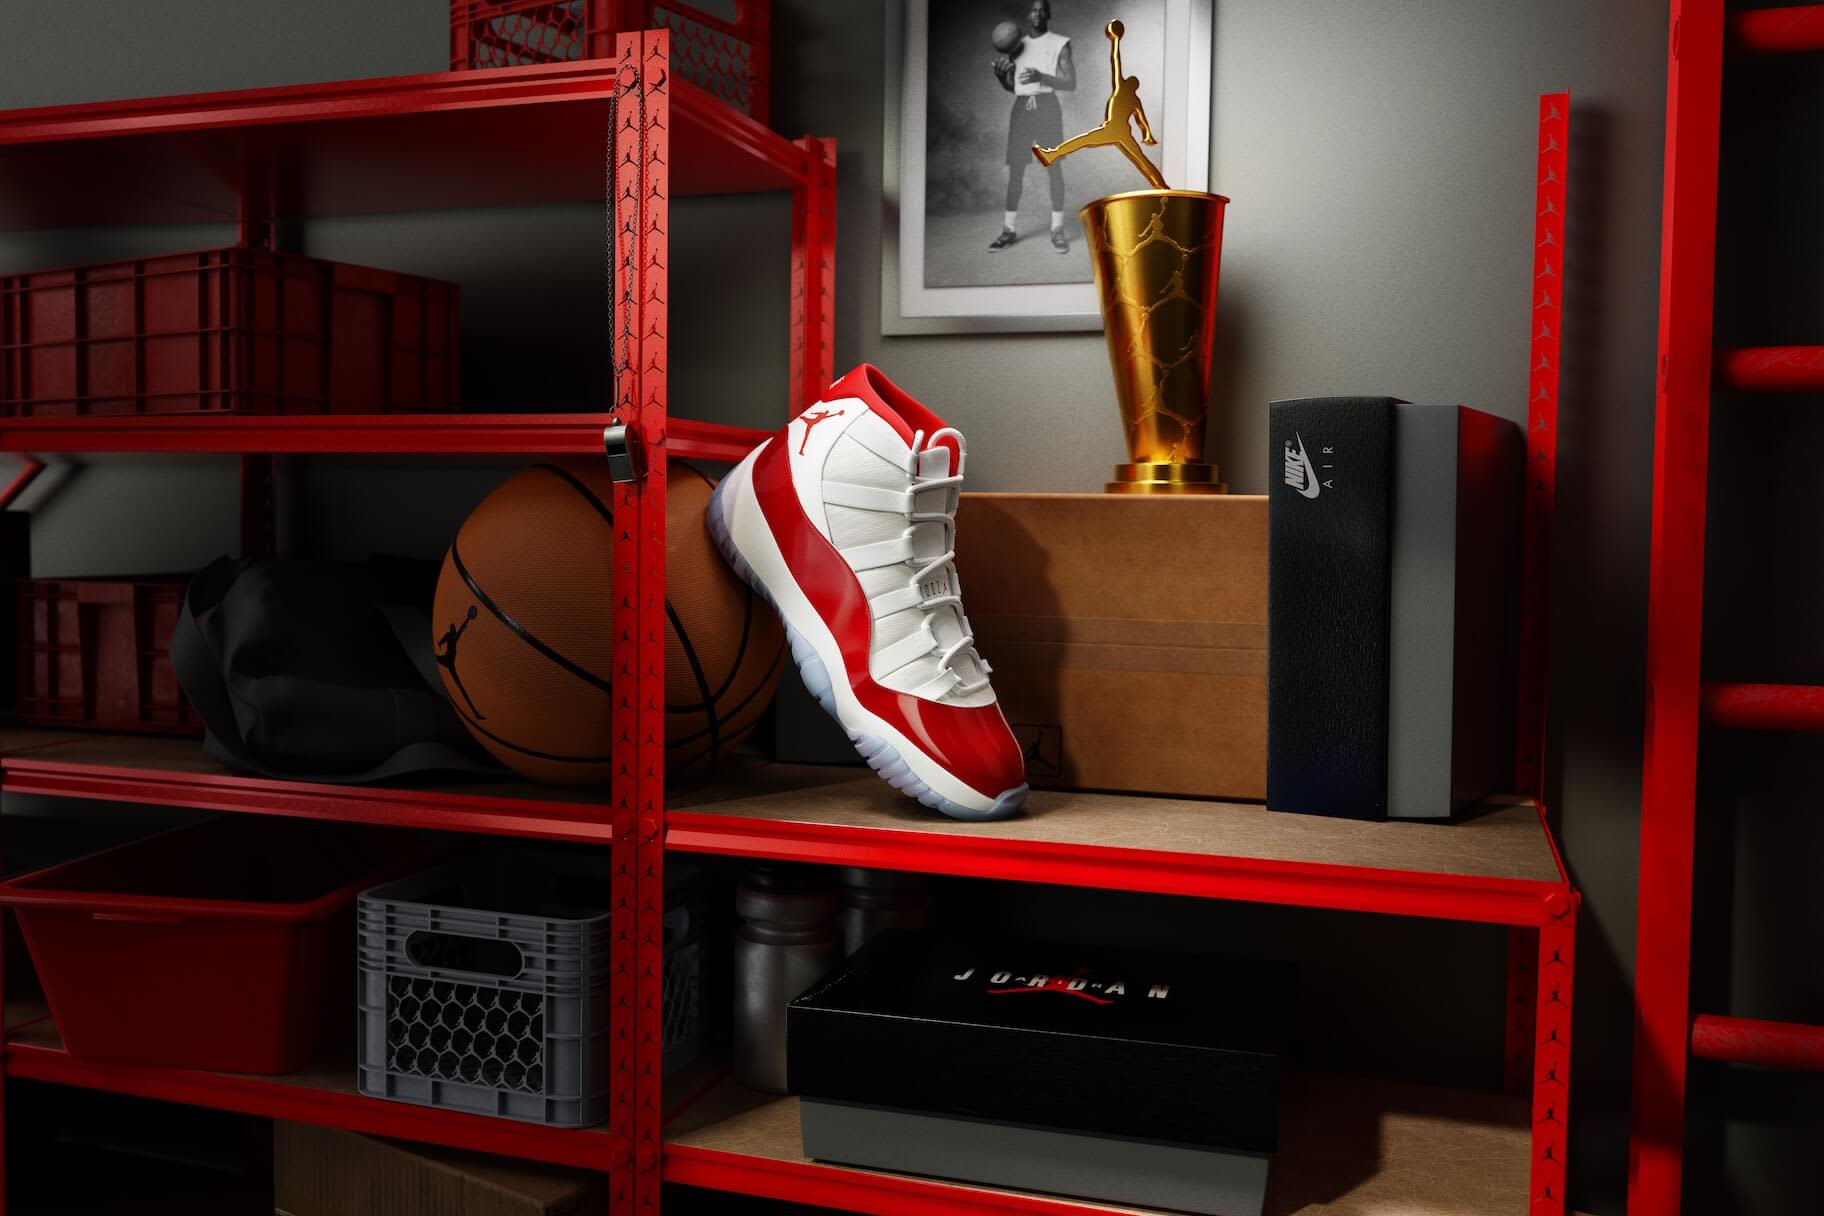 Basketball Shoes. Nike.Com